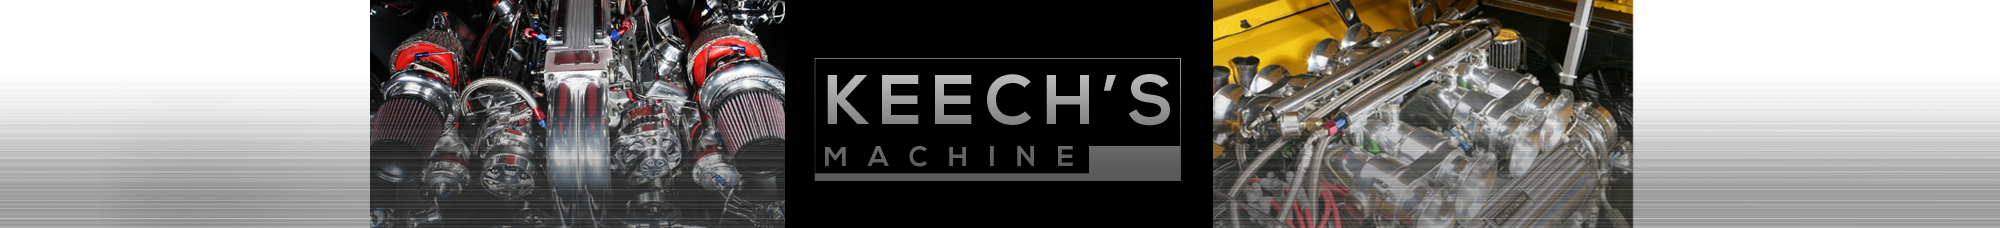 Formerly The Big Machine - Keech's Machine - Sarasota Engine Restoration